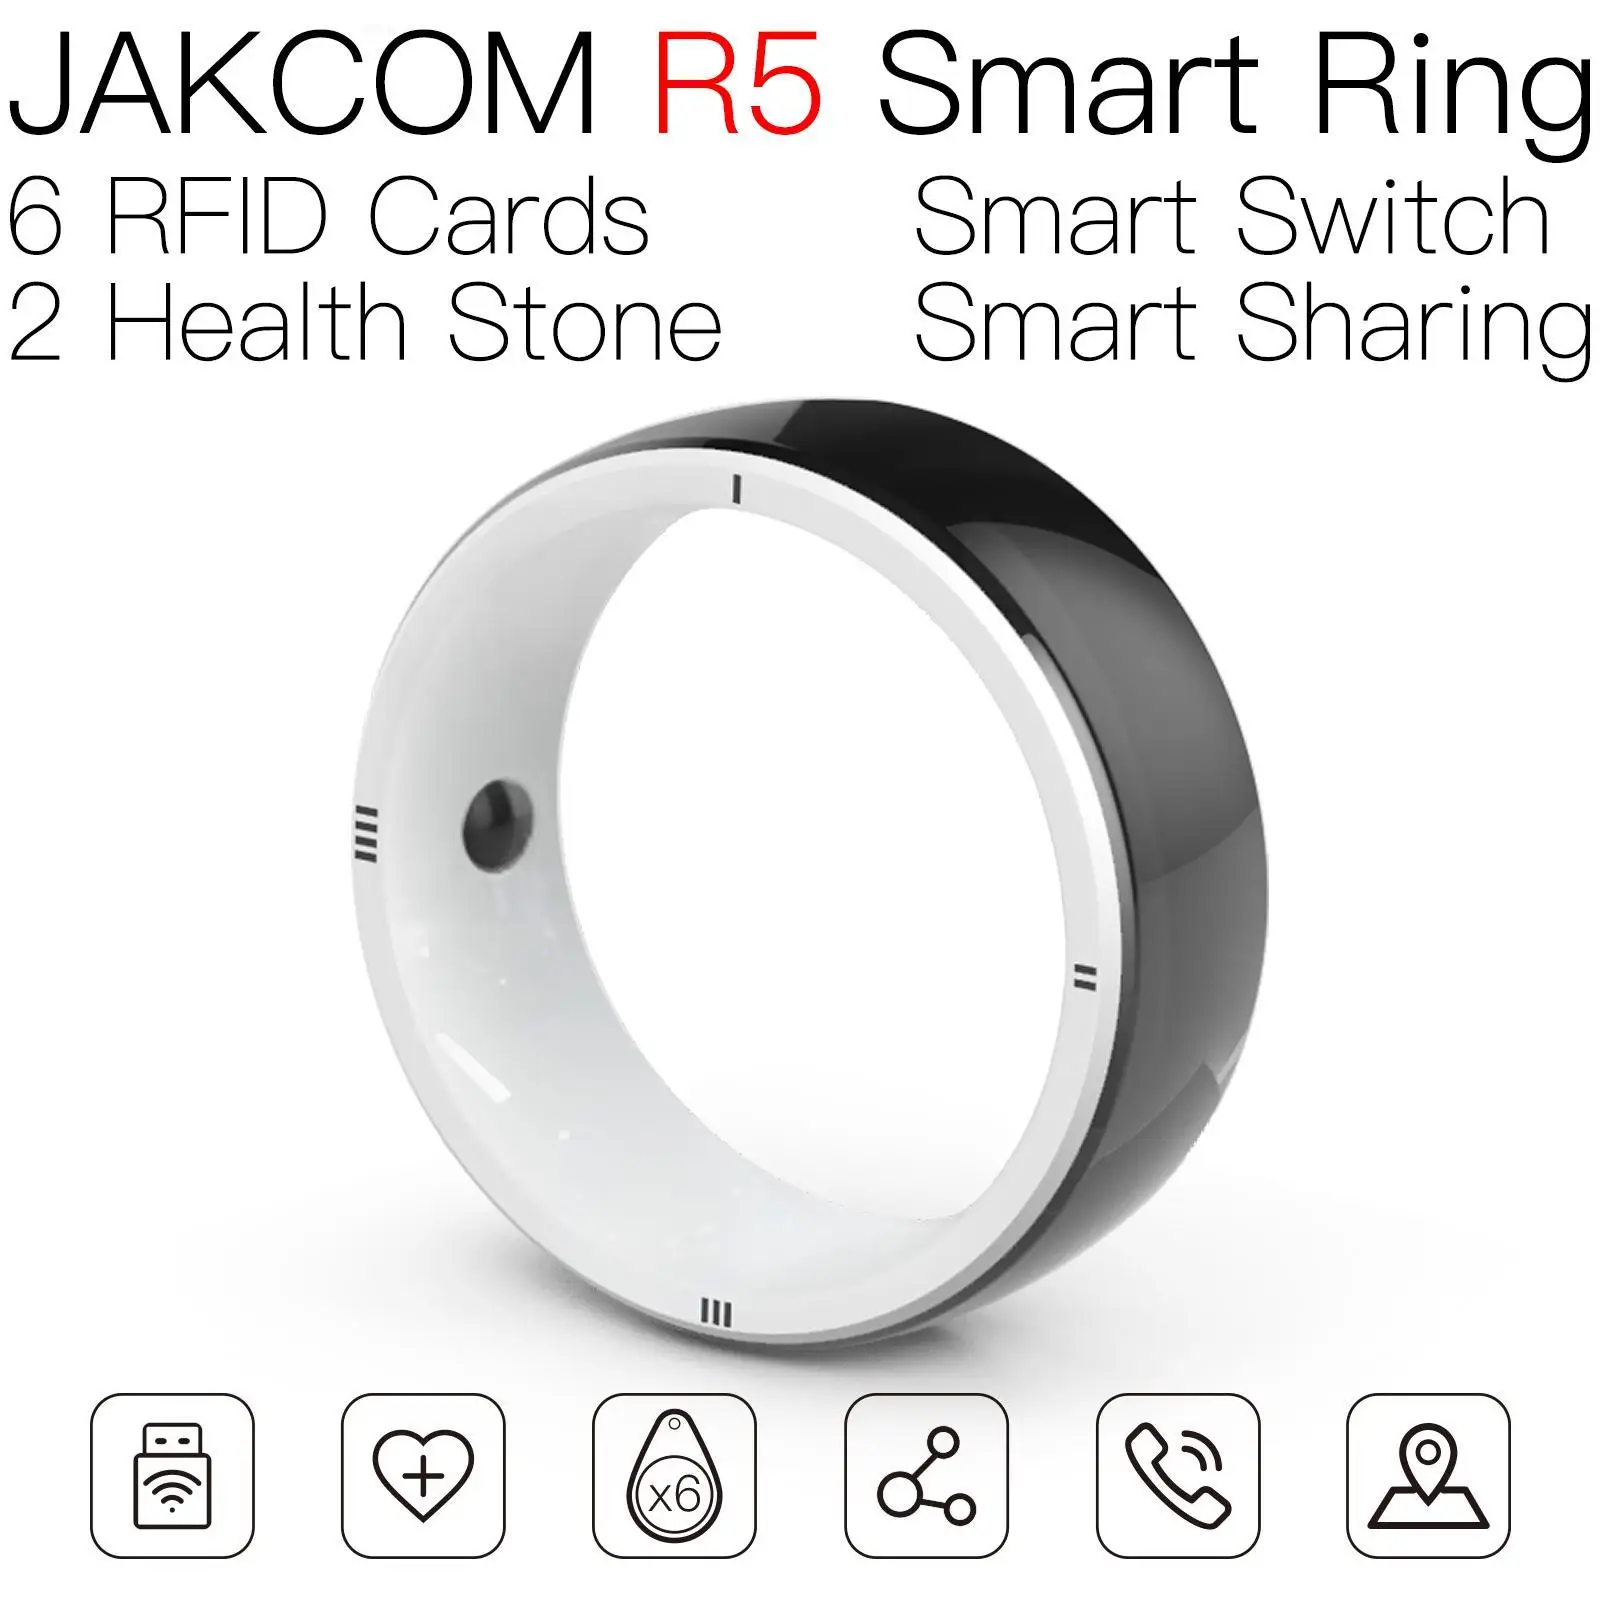 

JAKCOM R5 Smart Ring Super value than veterinary syringe cow ear tags nfc card metal gravur rfid rewritable proximity 125khz